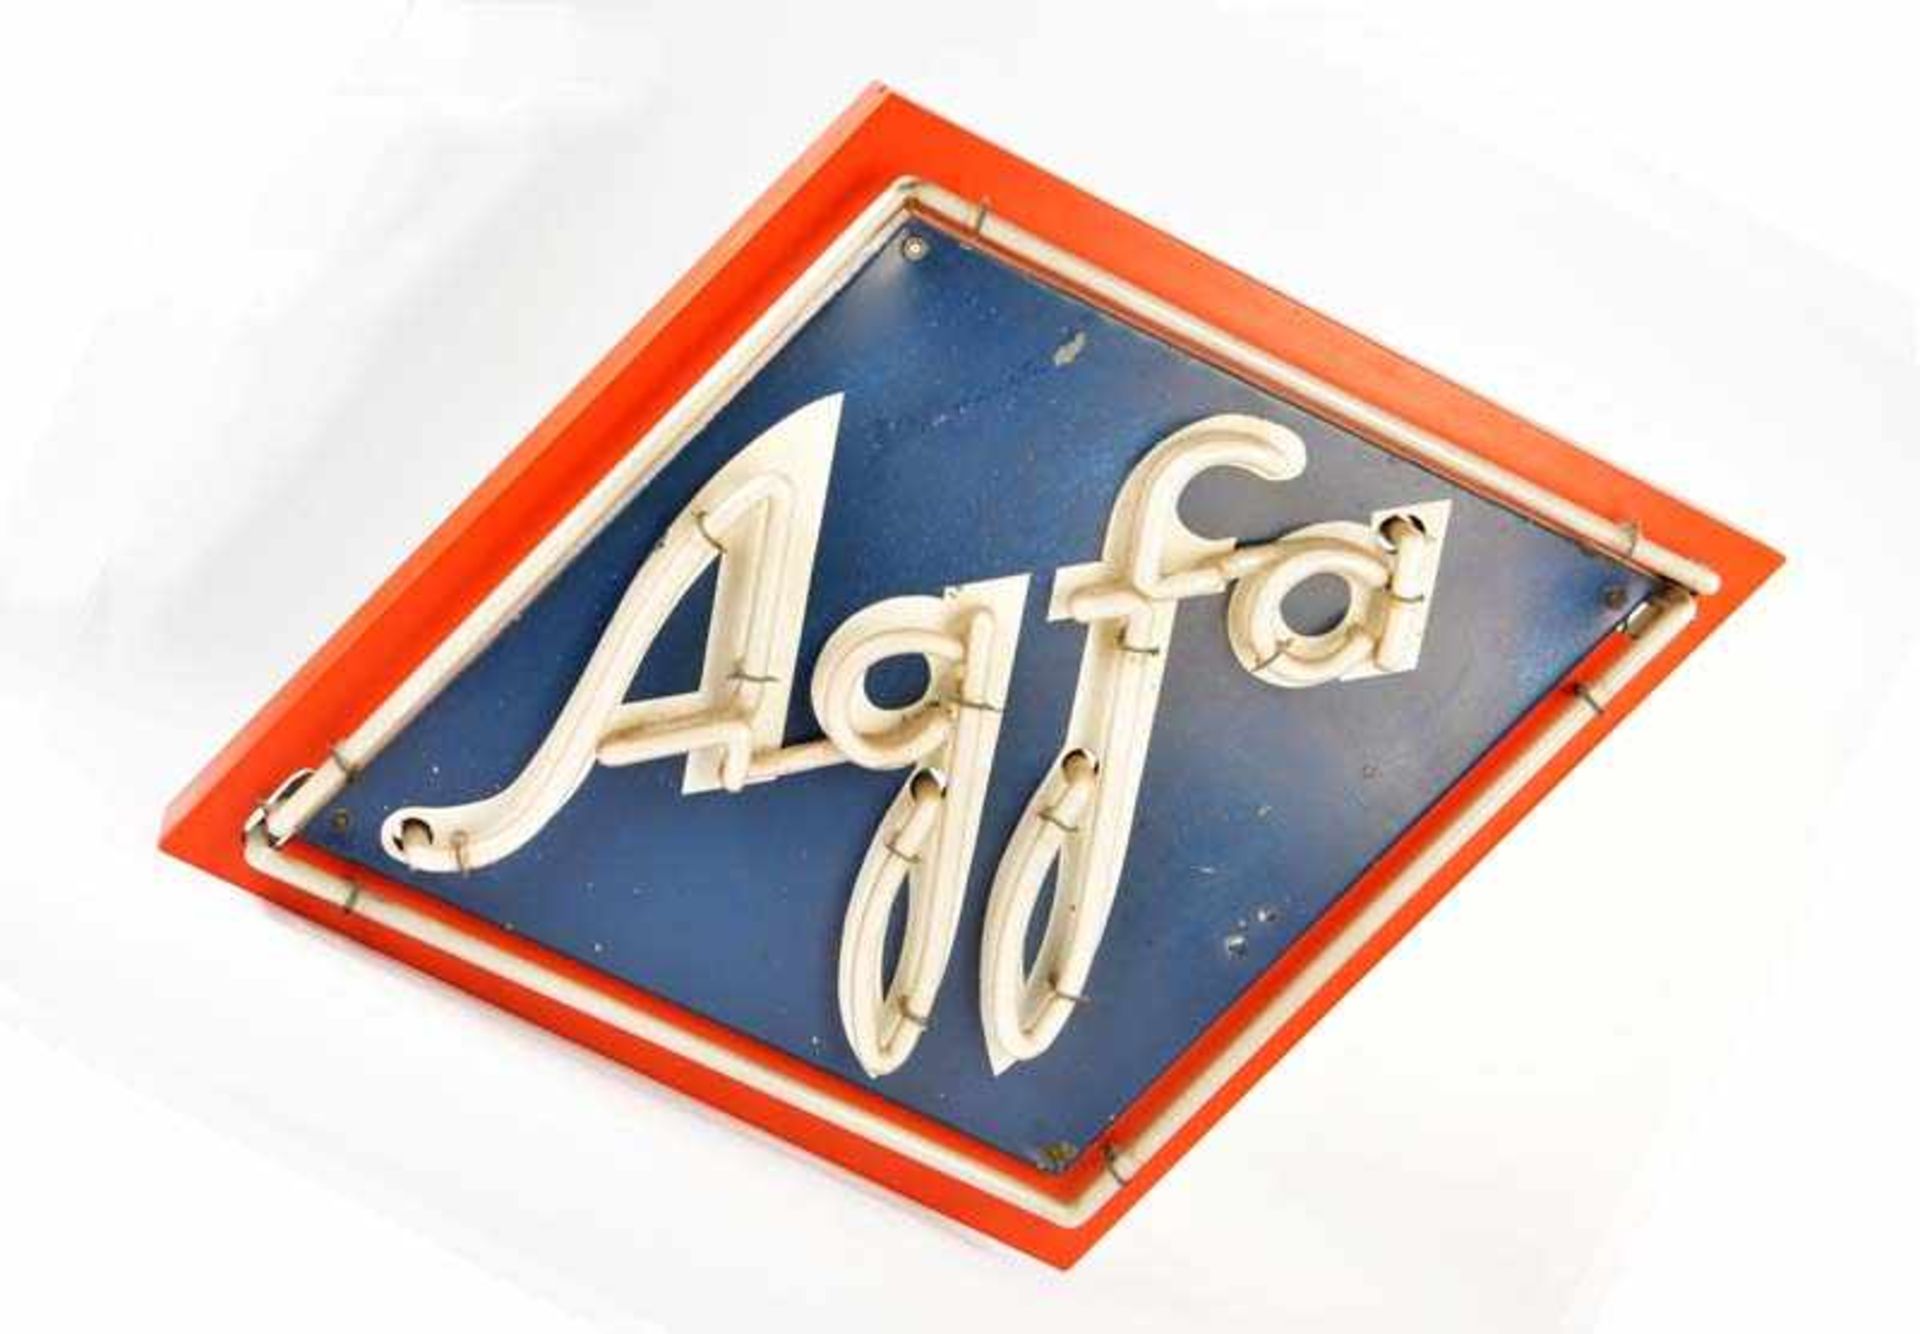 Agfa, Neon Leuchtreklame um 1960, 96x72 cm, Funktion ok, kein VersandAgfa, Illuminated Advertising